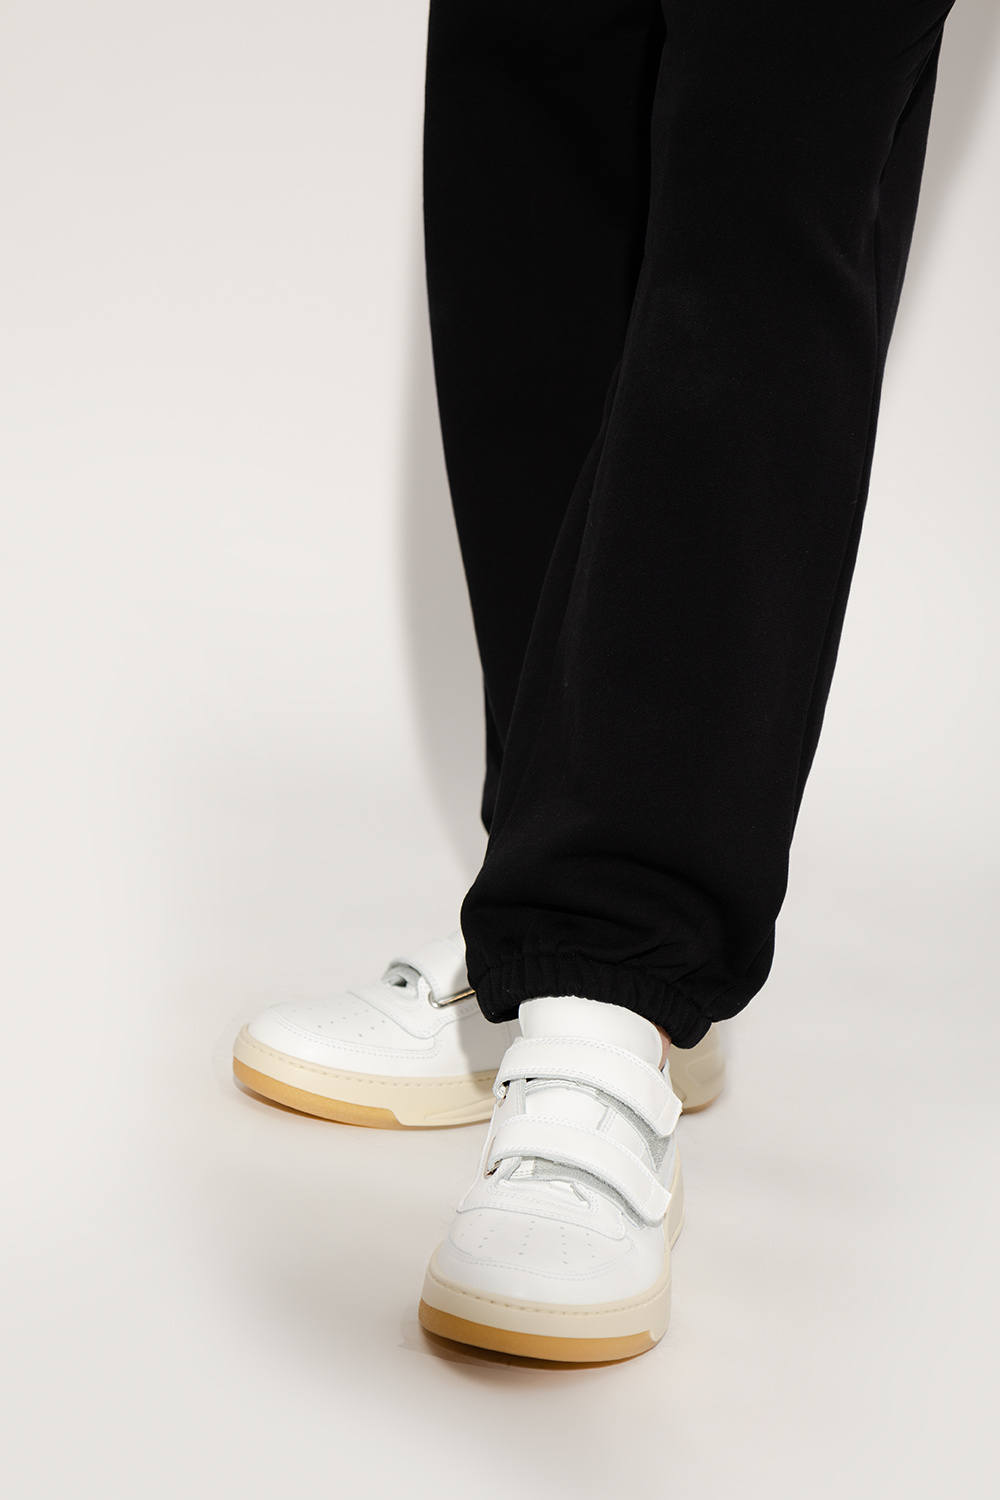 Steffey Friend Sneakers - Acne Studios - White - Leather